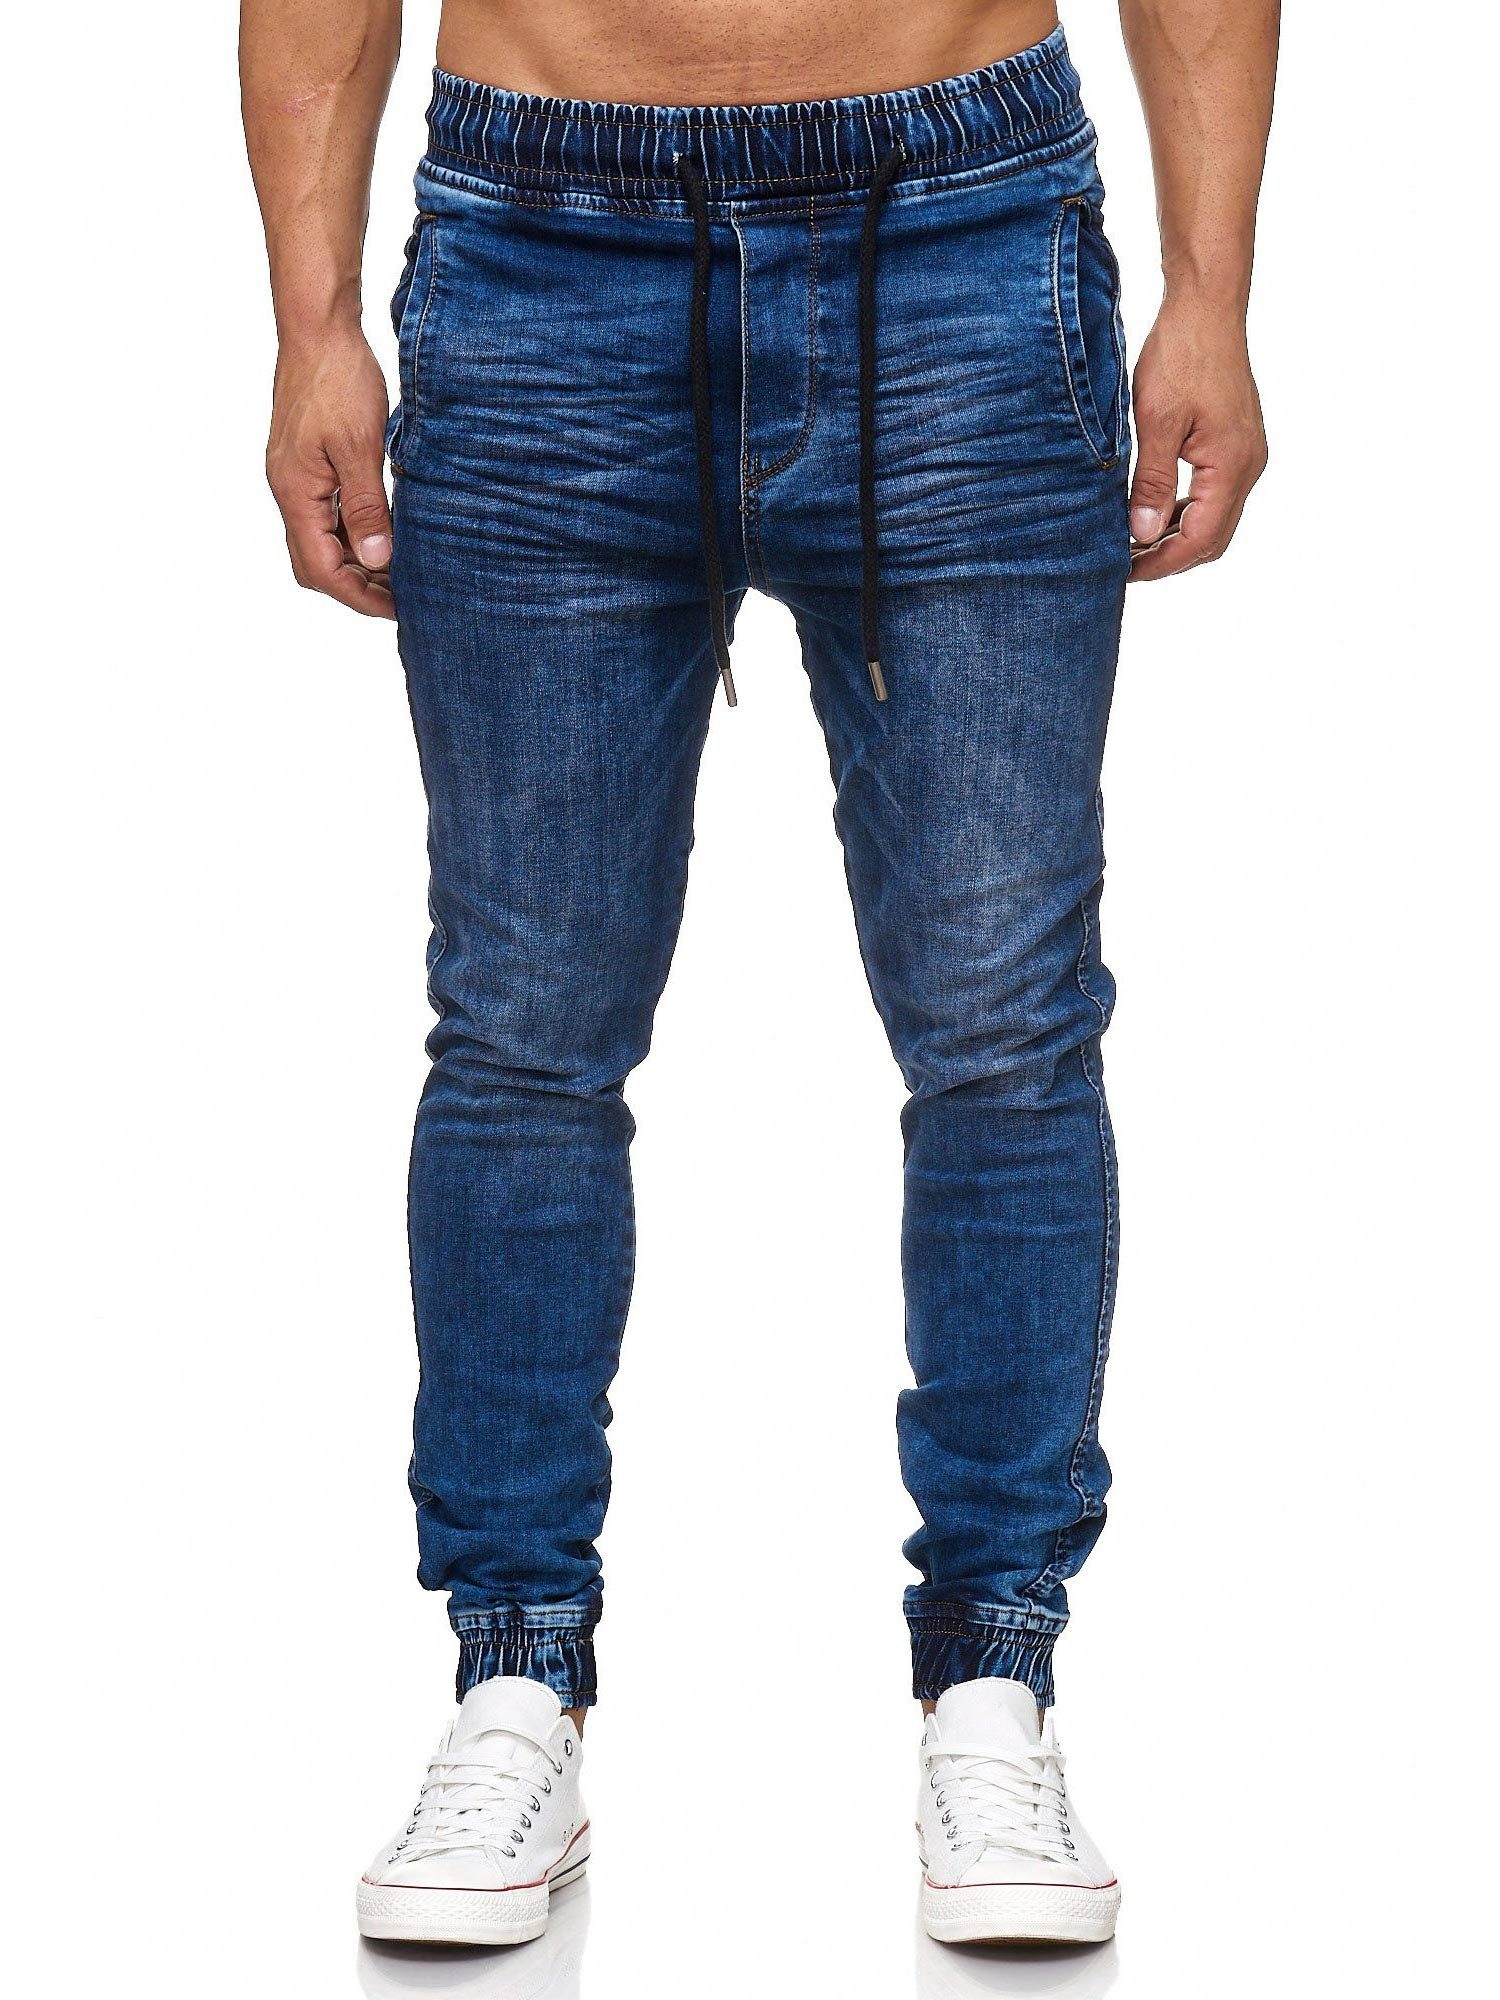 im Hose 17504 Tazzio Sweat blau Jogger-Stil Straight-Jeans